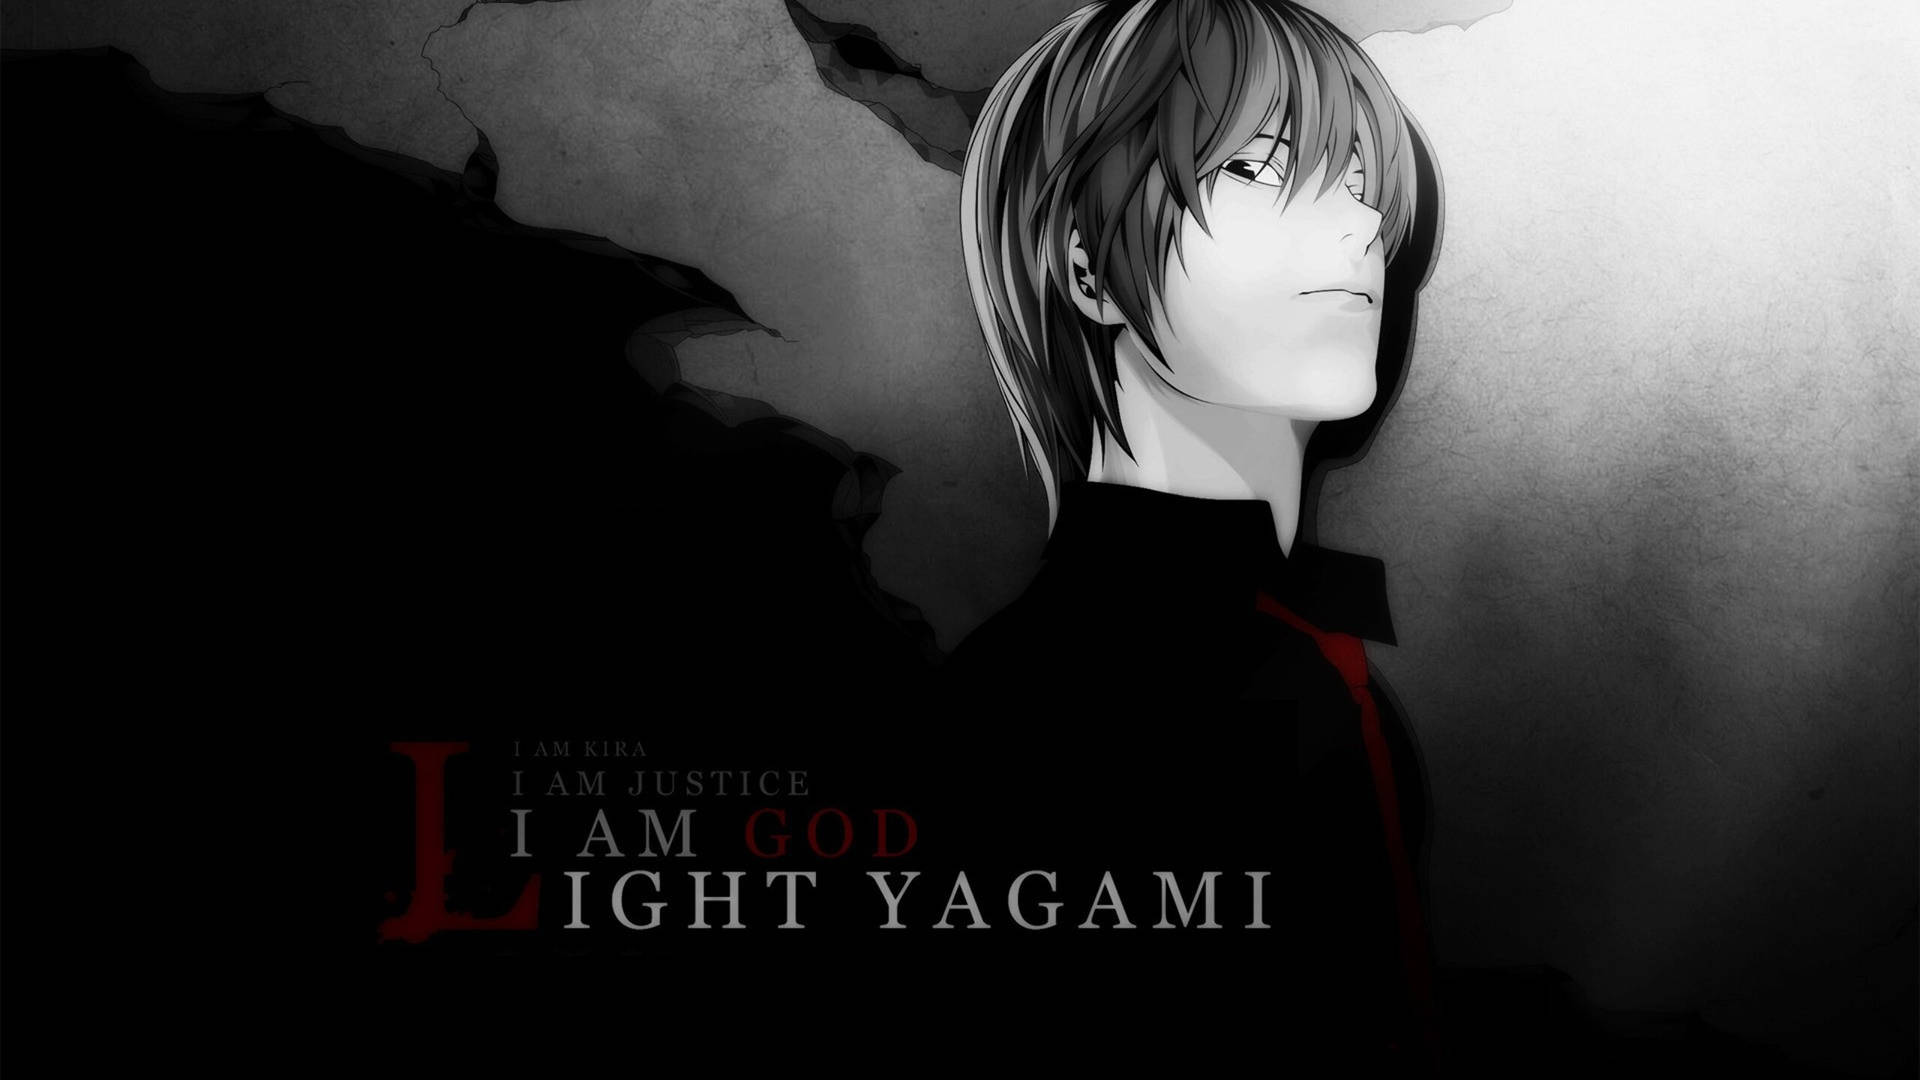 Lightyagami, Ich Bin Gott. Wallpaper